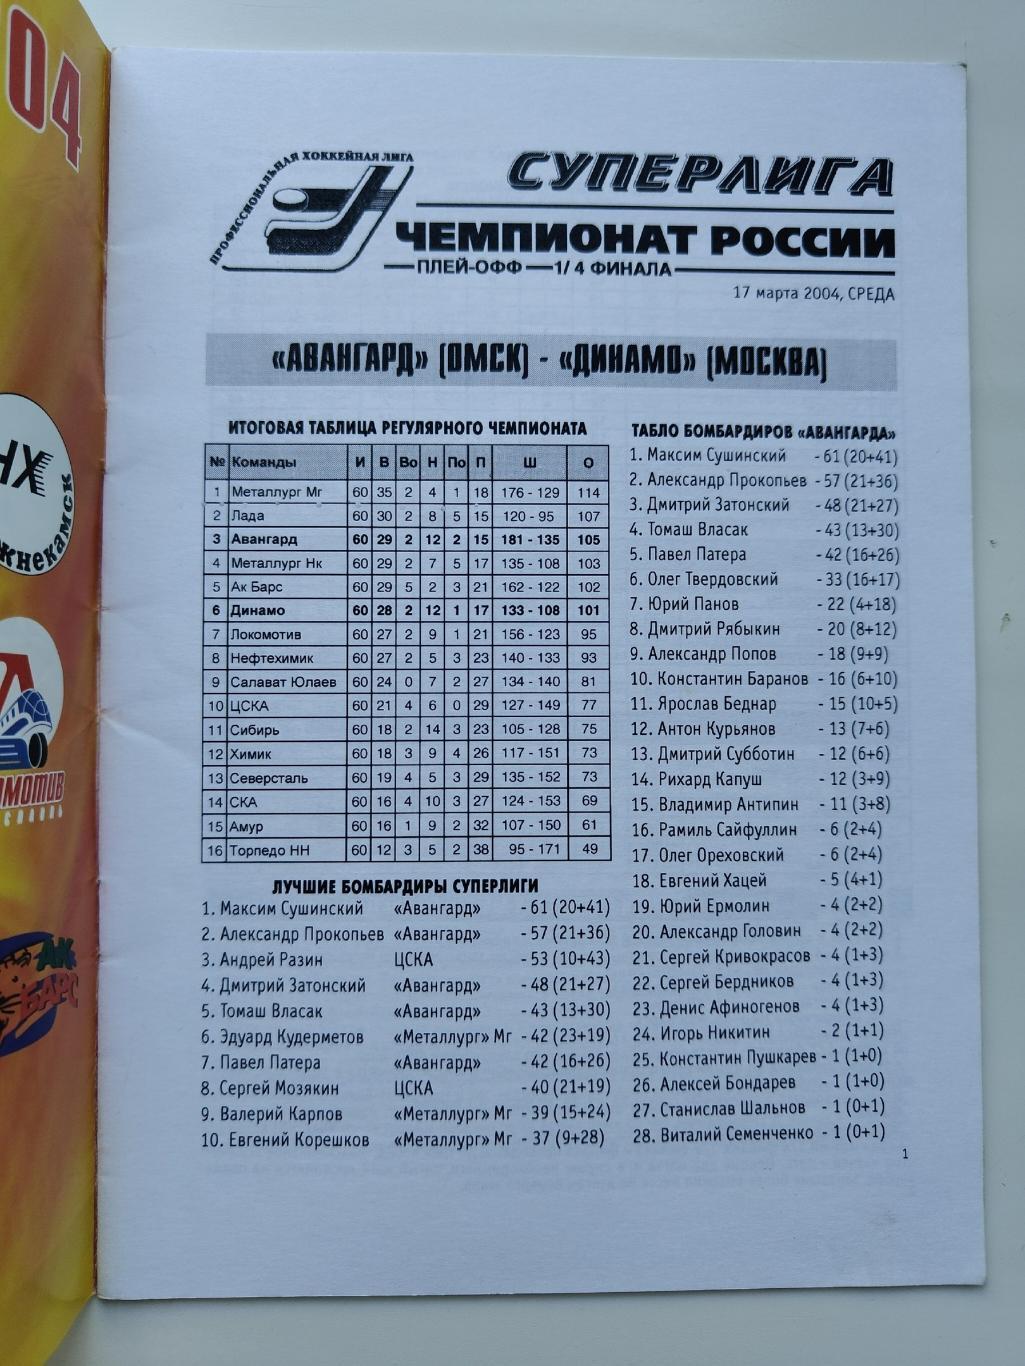 Авангард Омск - Динамо Москва 17 марта 2004 плей-офф 1